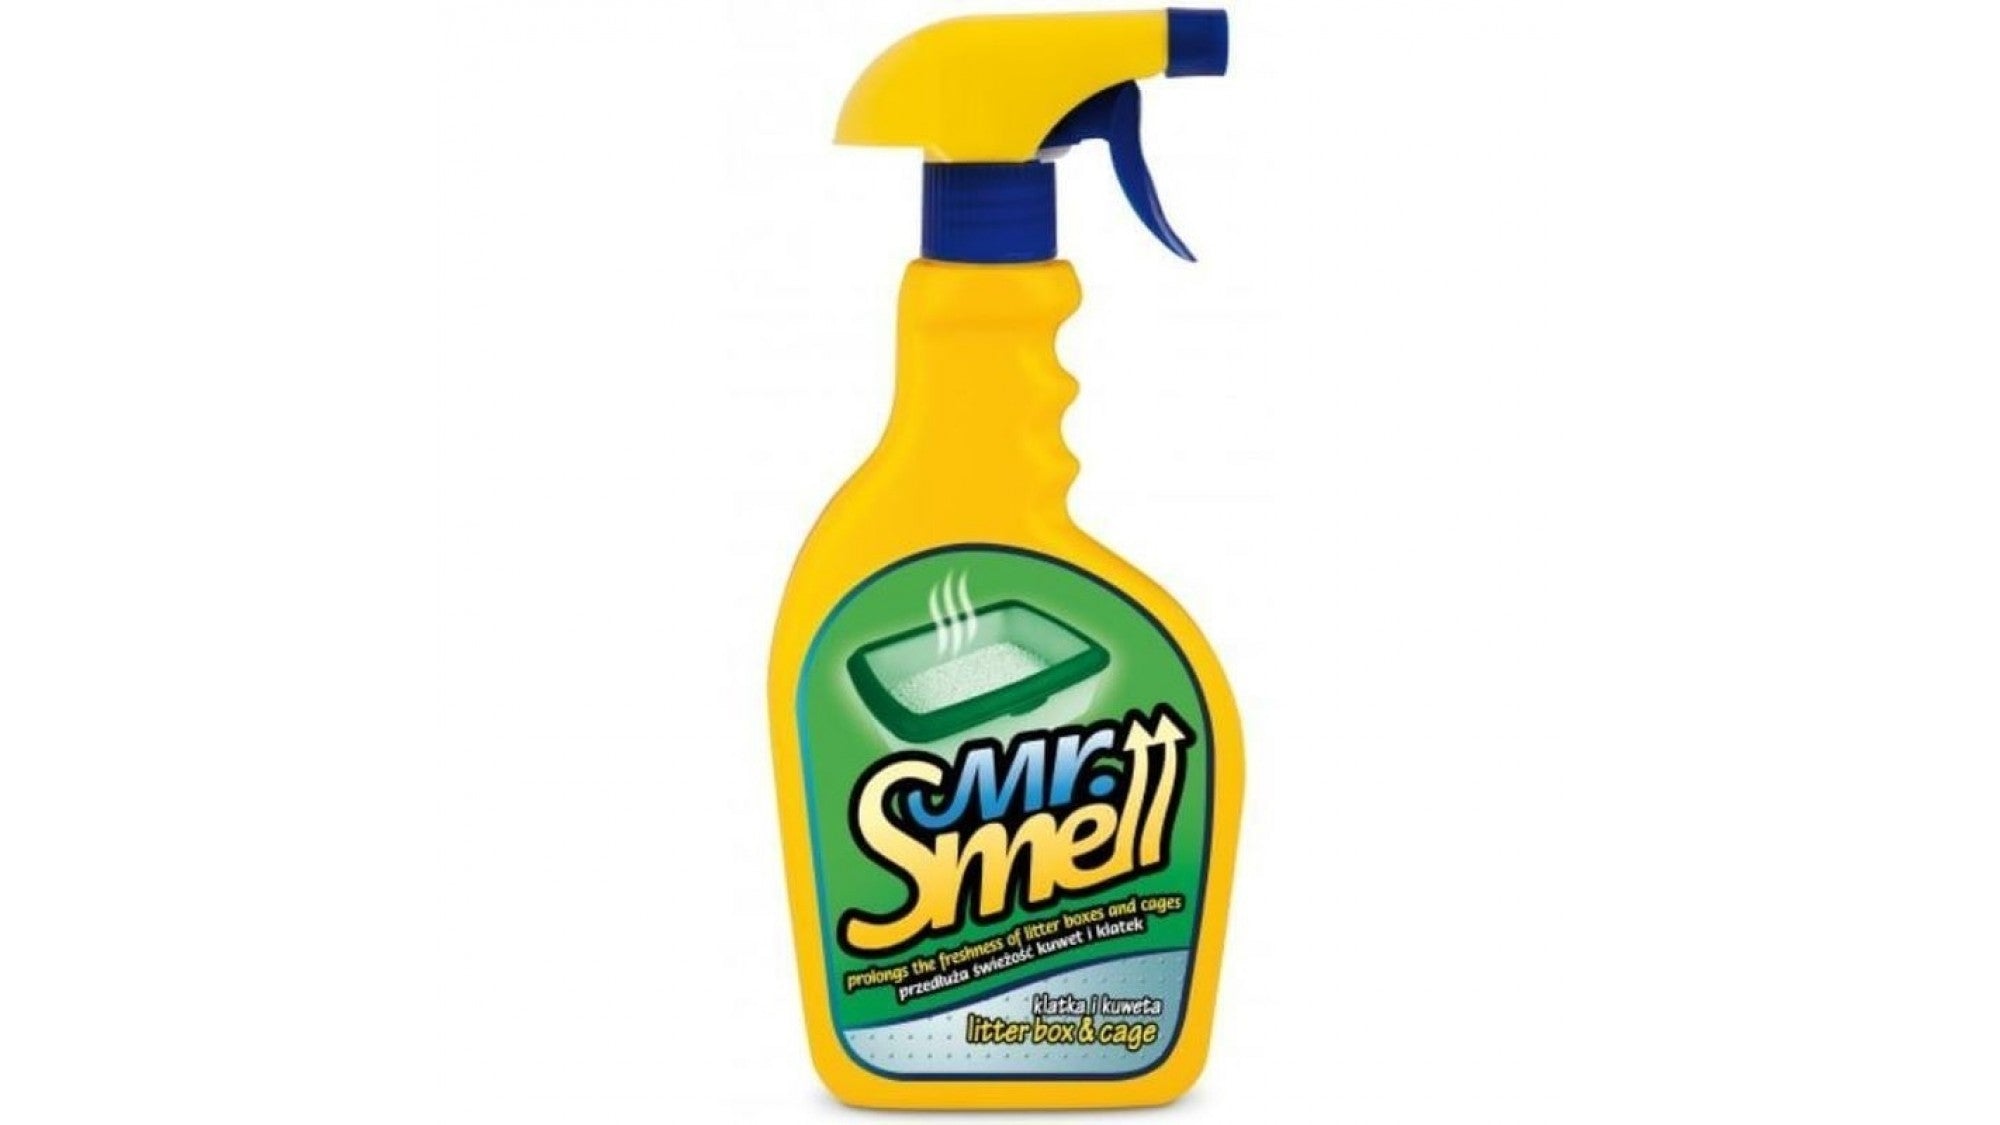 Mr. Smell Indepartaza mirosul de urina cusca / litiera, 500 ml